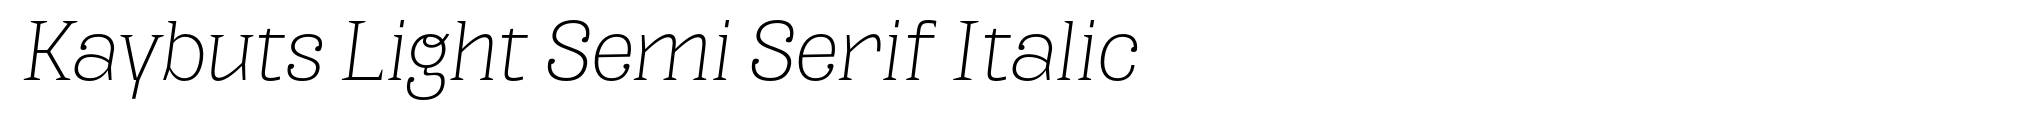 Kaybuts Light Semi Serif Italic image